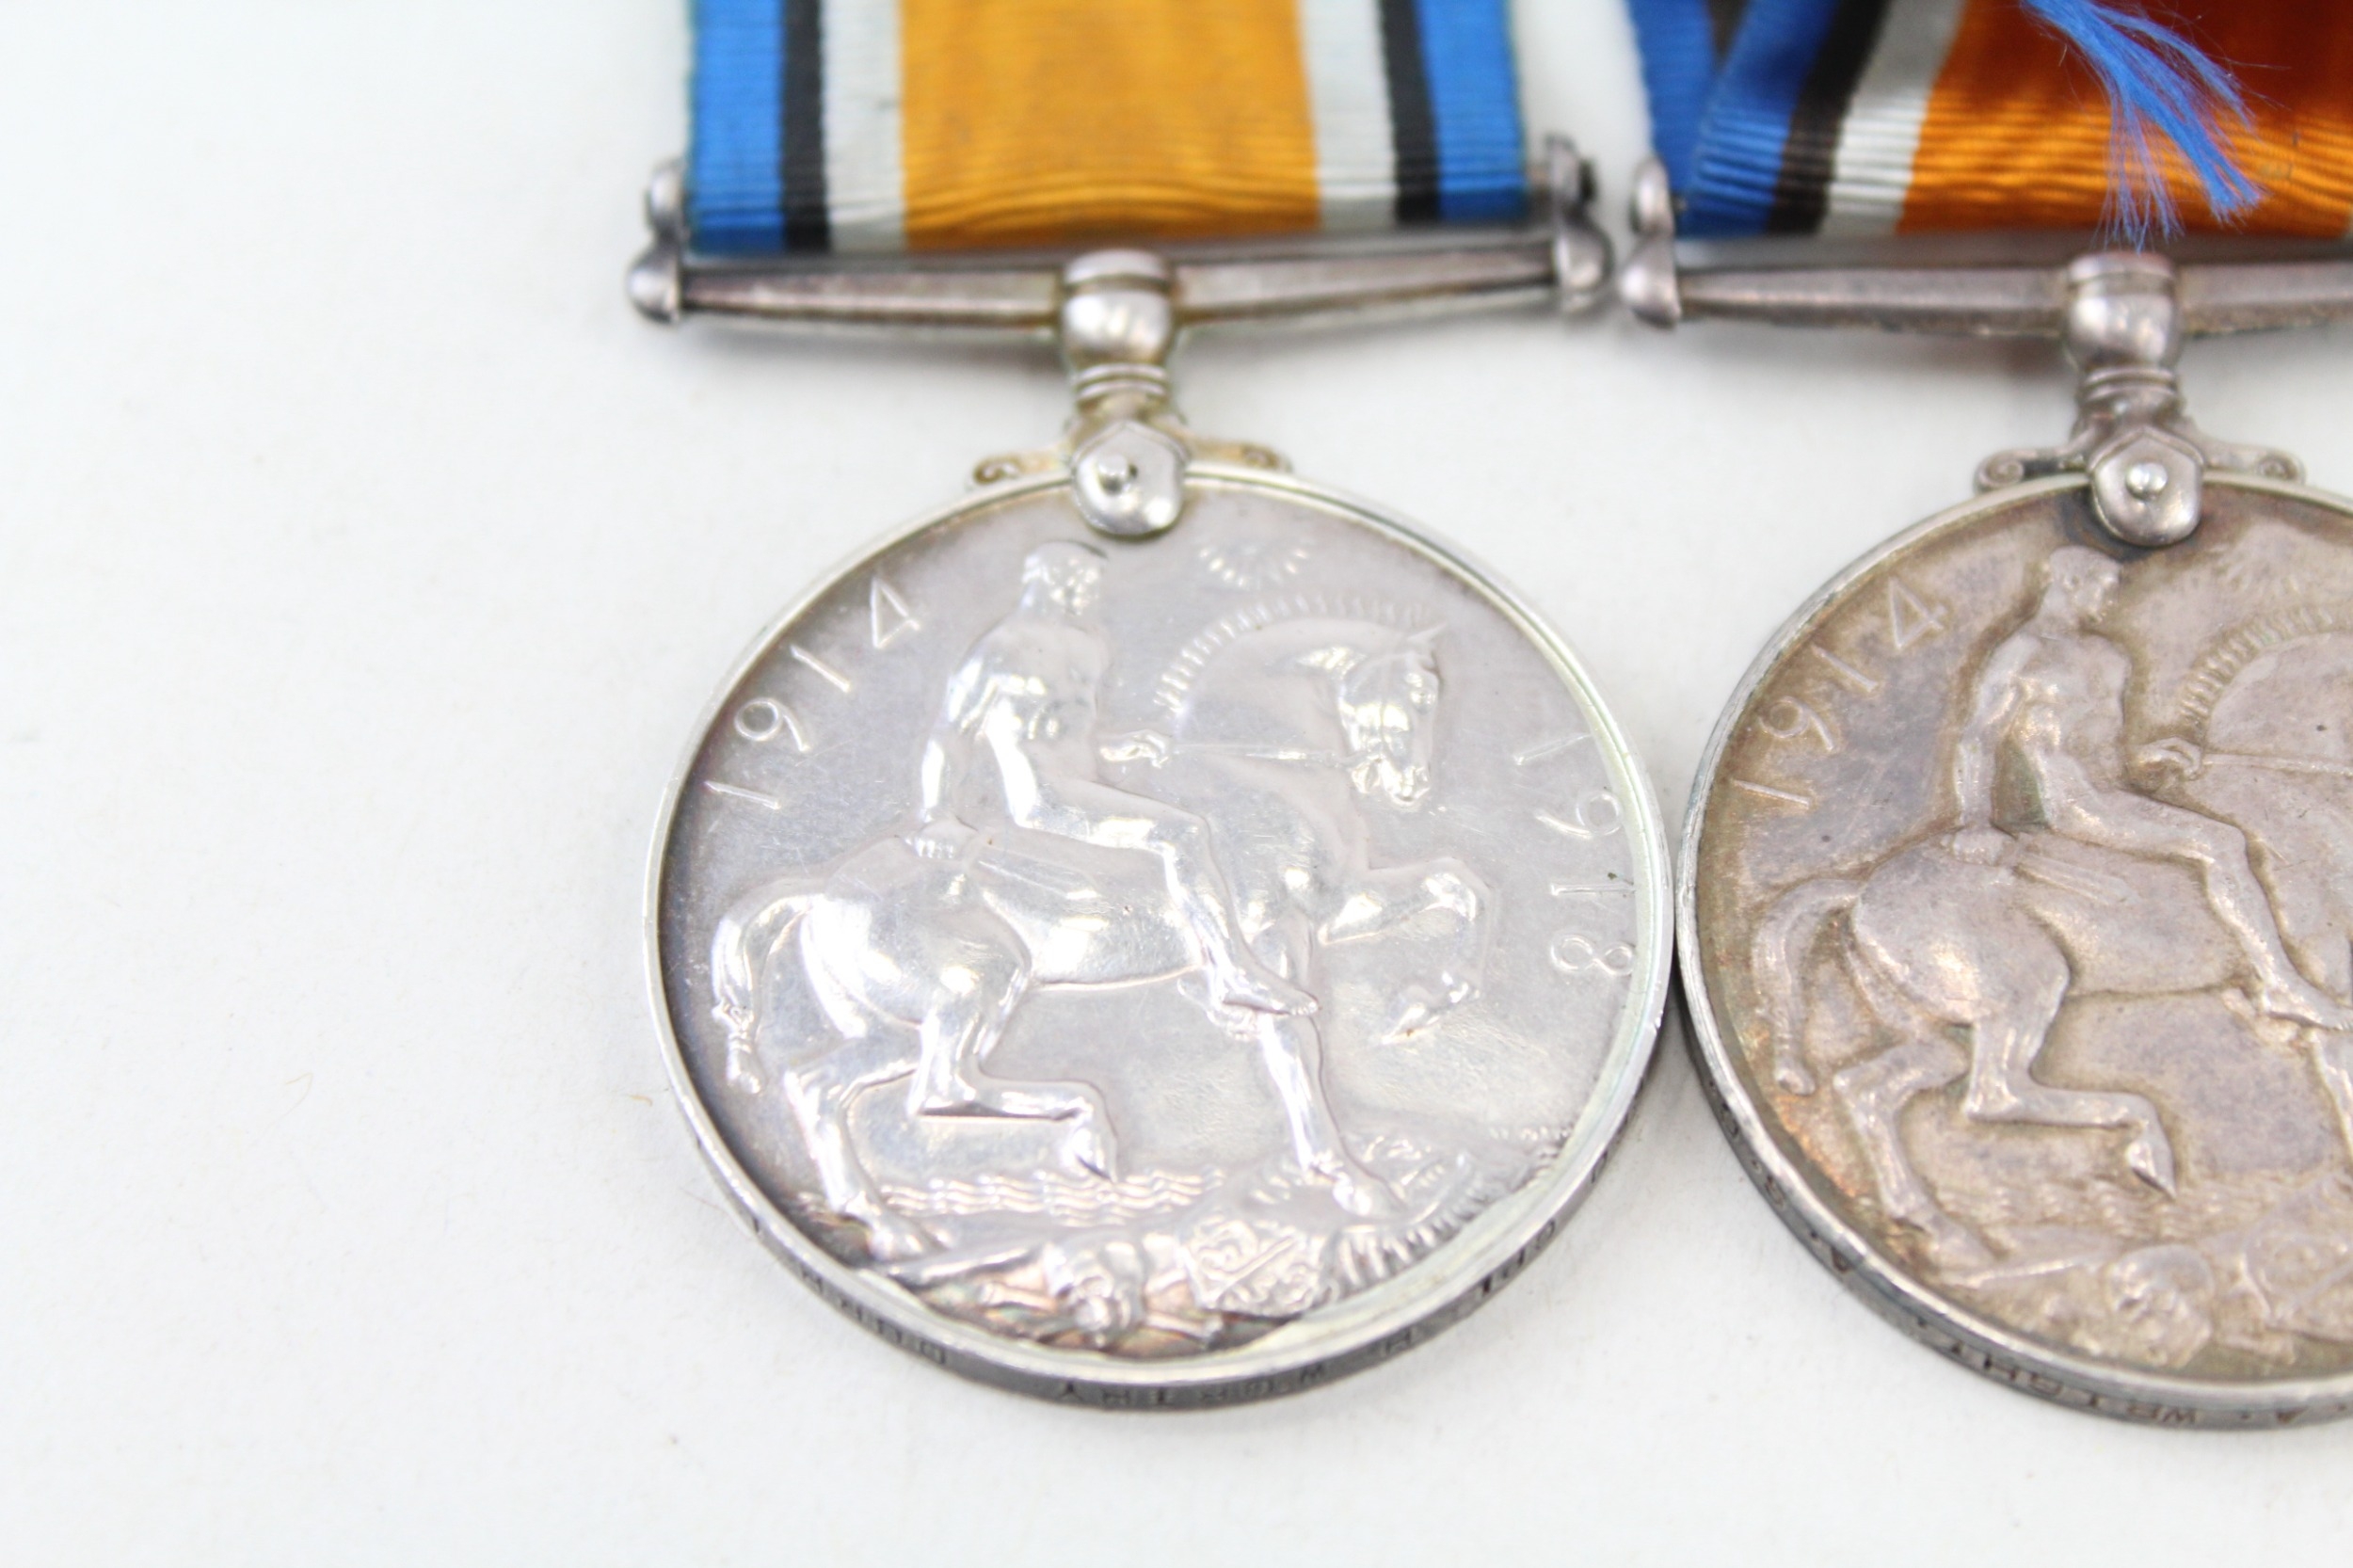 WW1 Medals x 4 Named Wr 4660 Cpl H.Worthy D.L.I M2 020272 Pte. A. Wright - Image 4 of 6